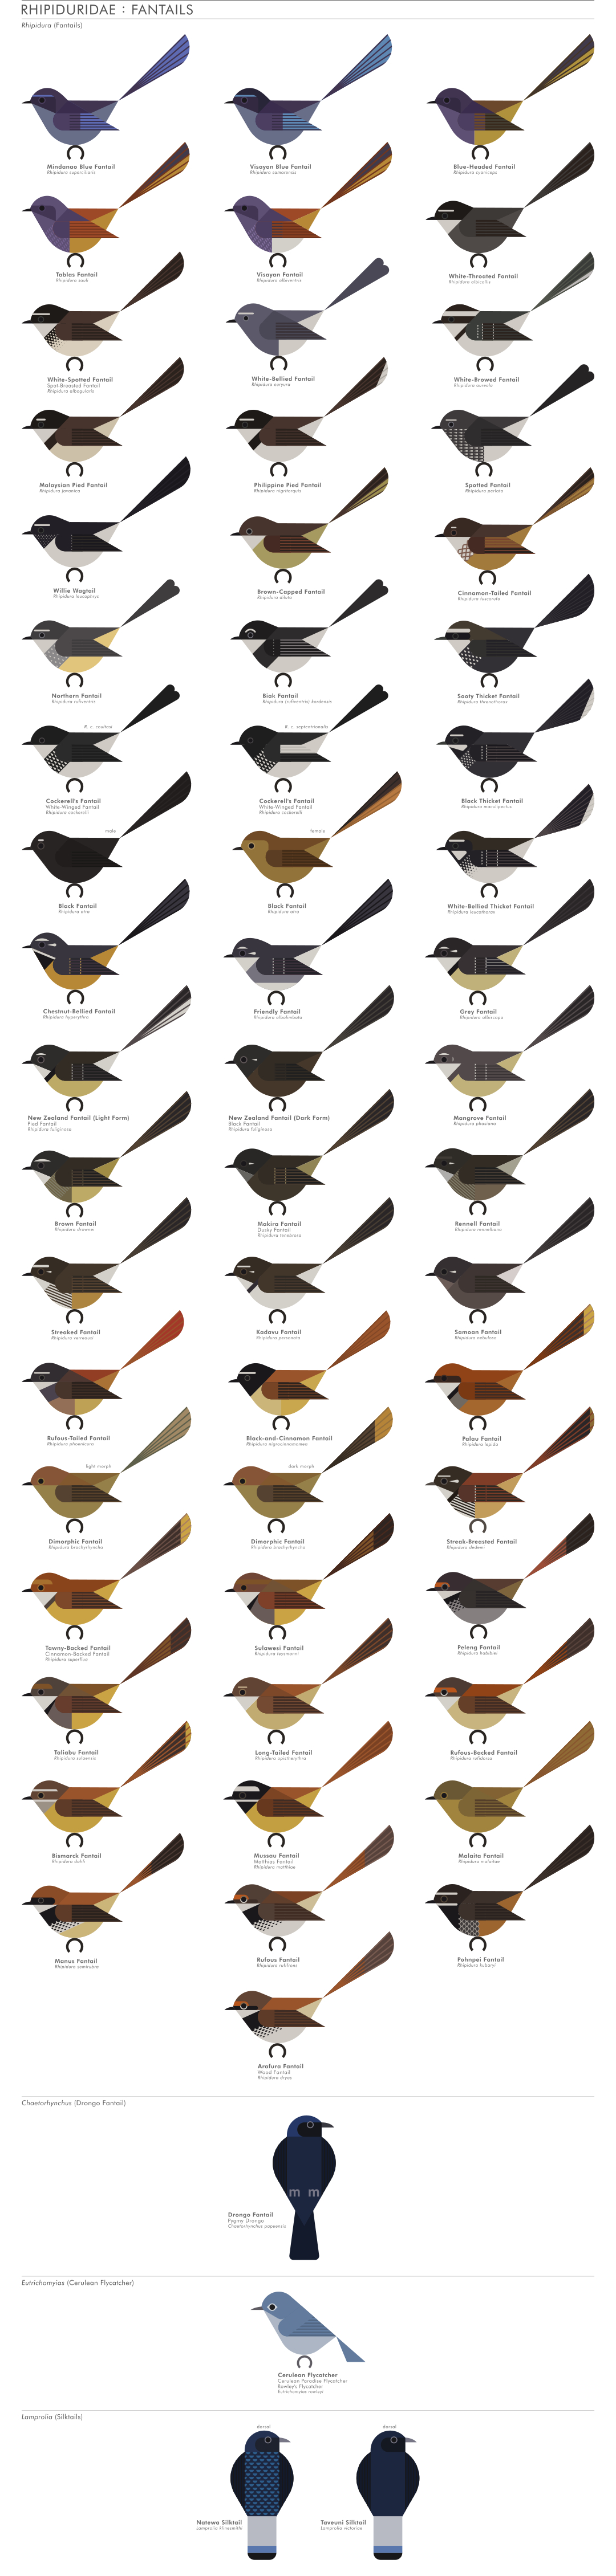 scott partridge - AVE - avian vector encyclopedia - fantails - bird vector art